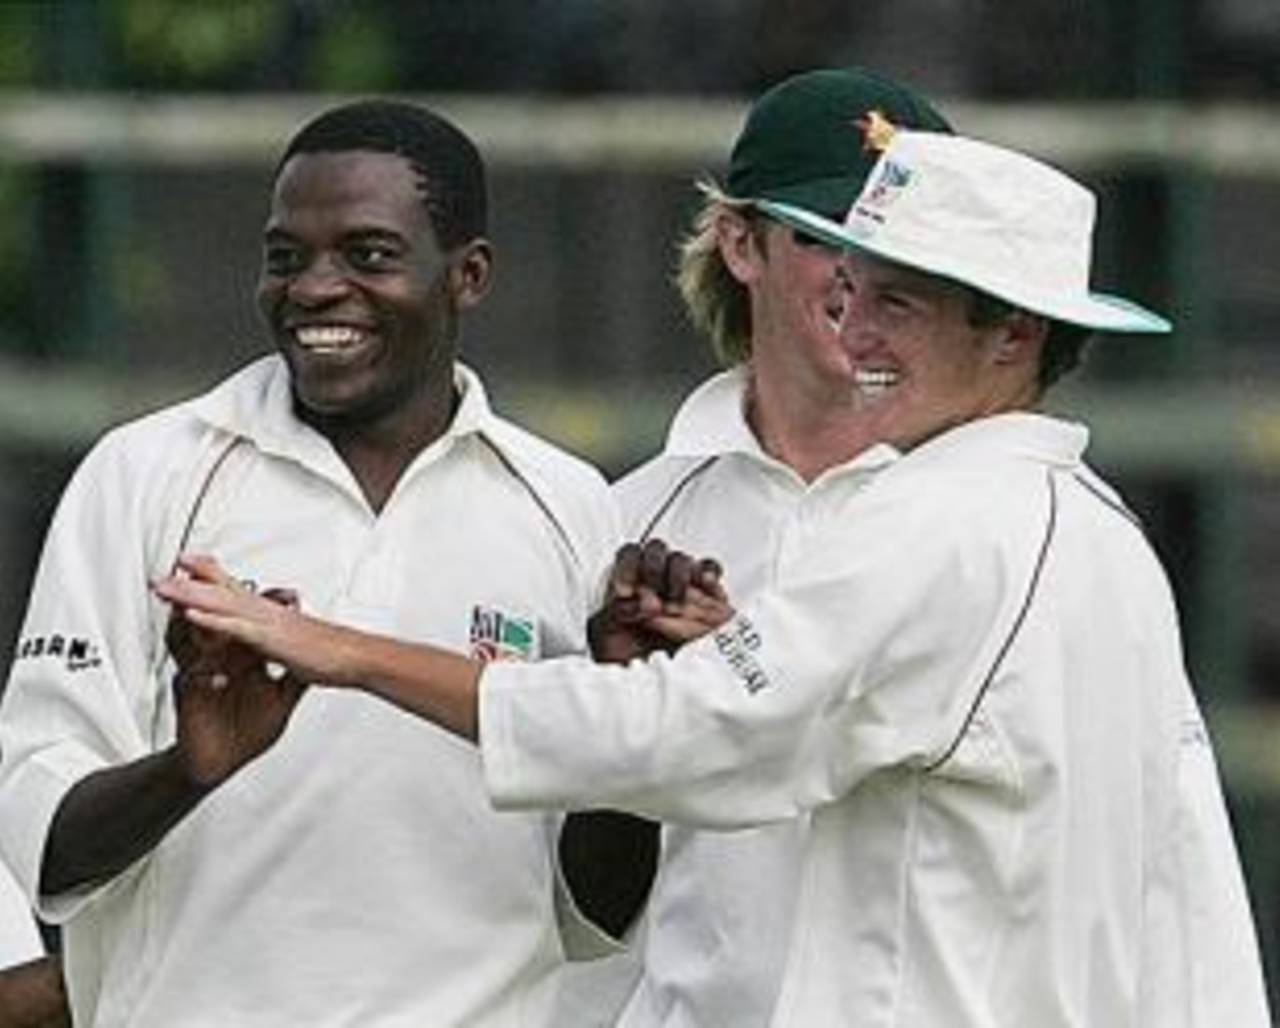 Blessing Mahwire celebrates after dismissing Rahul Dravid, Zimbabwe v India, 2nd Test, Harare, September 21, 2005